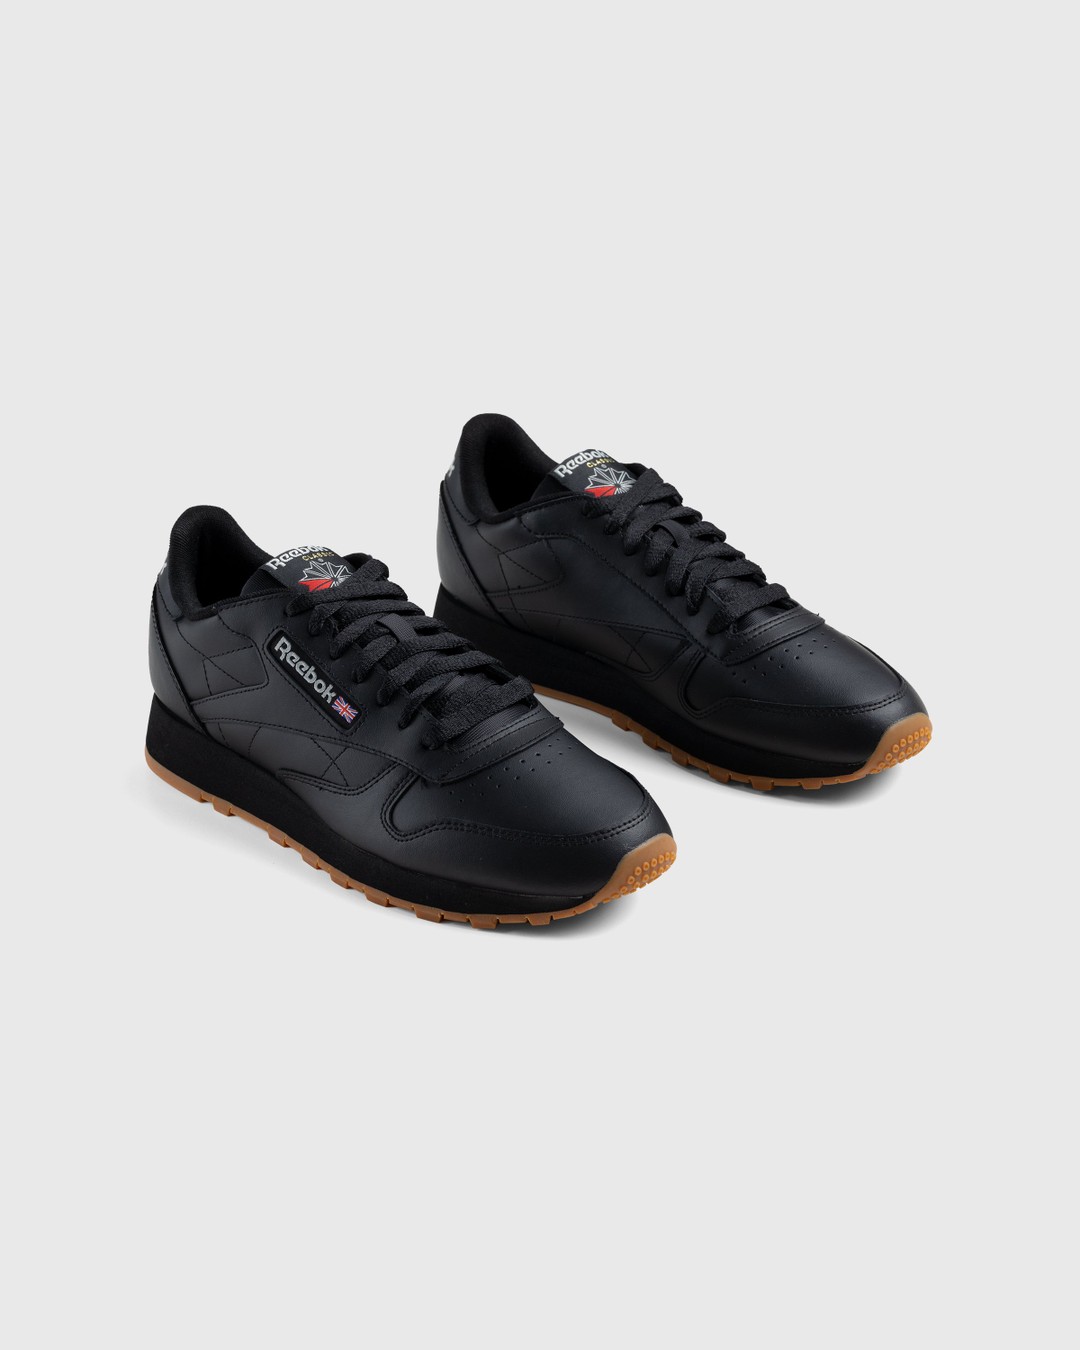 Reebok – Classic Leather Black - Sneakers - Black - Image 2